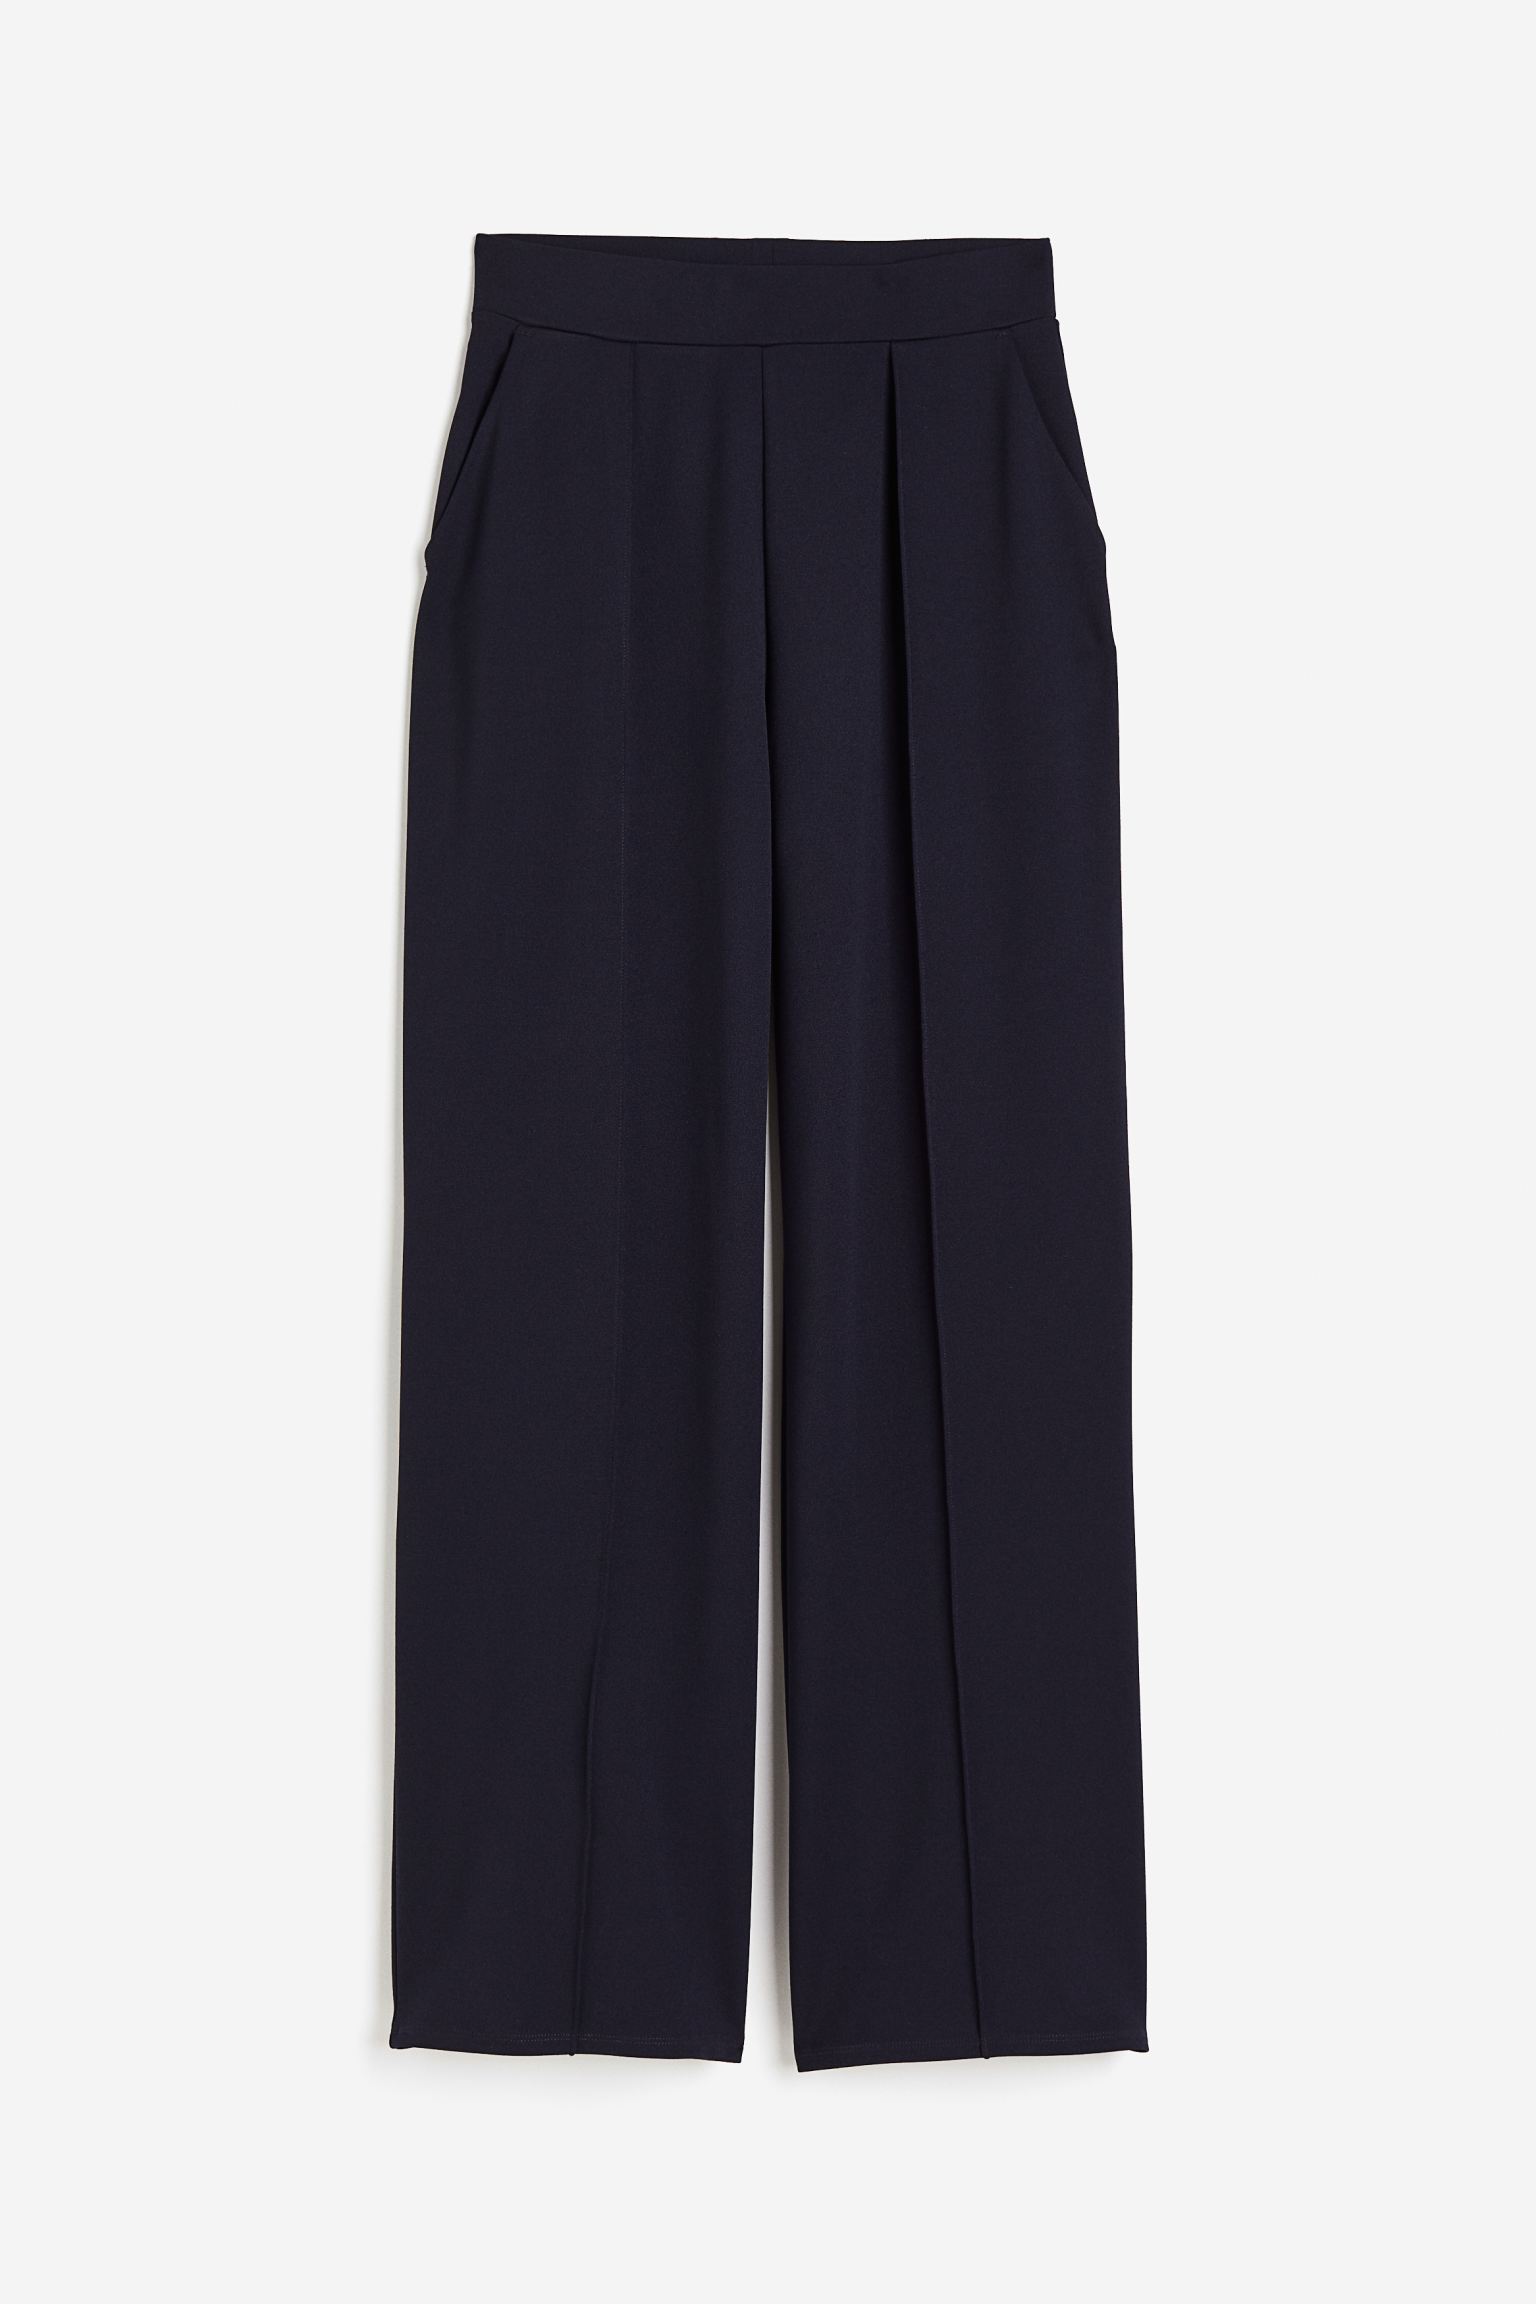 Брюки H&M High-waist Dress, темно-синий широкие креповые брюки sayakat со складками спереди ted baker цвет coral